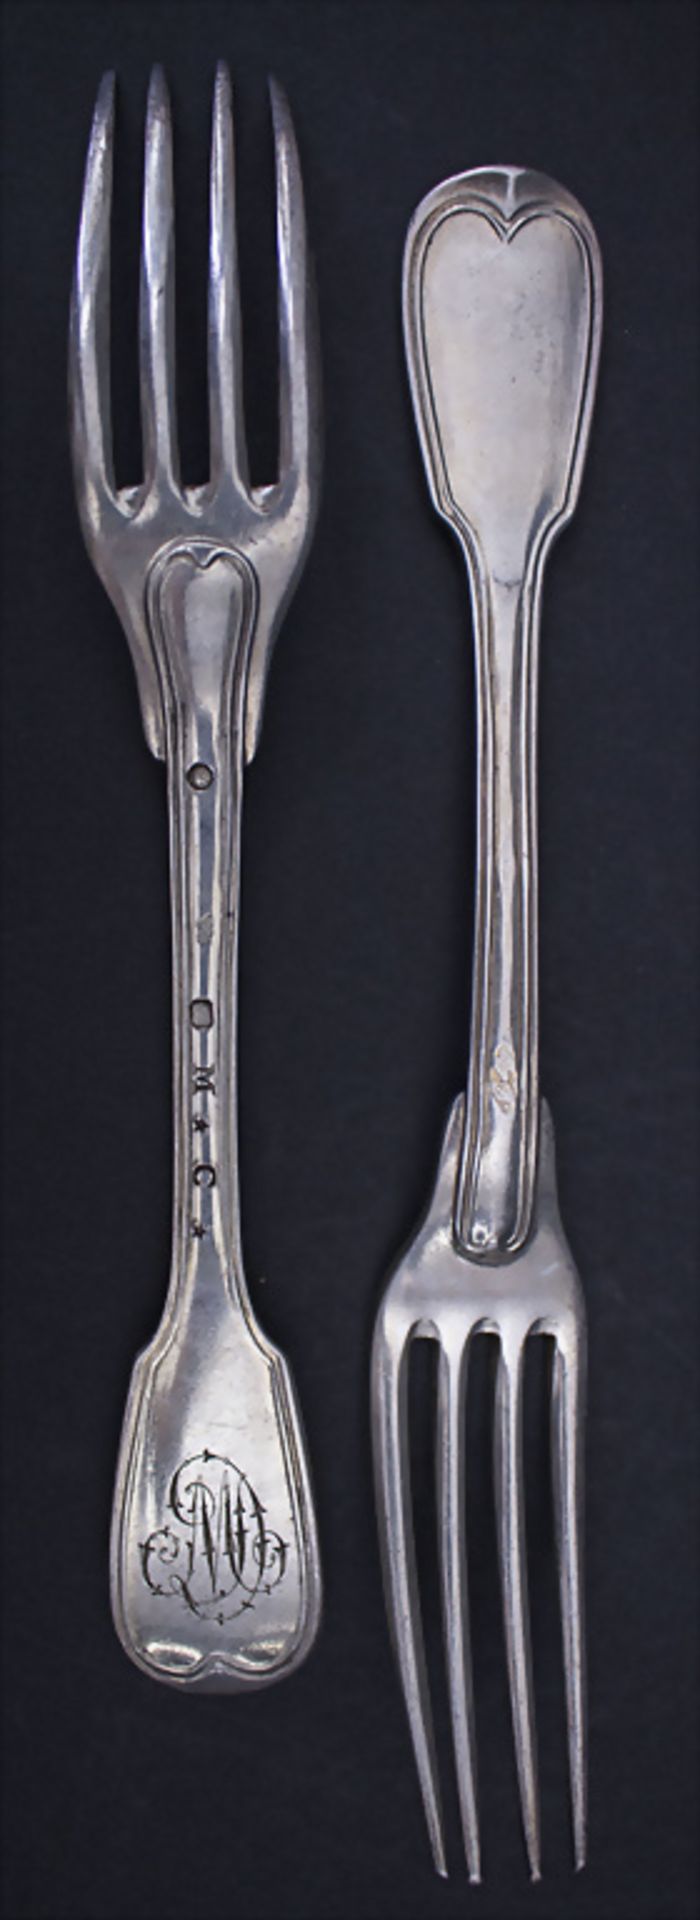 12-tlg. Silberbesteck / A 12-piece set of silver cutlery, J.L. Tardiou, Paris, nach 1819 - Image 2 of 6